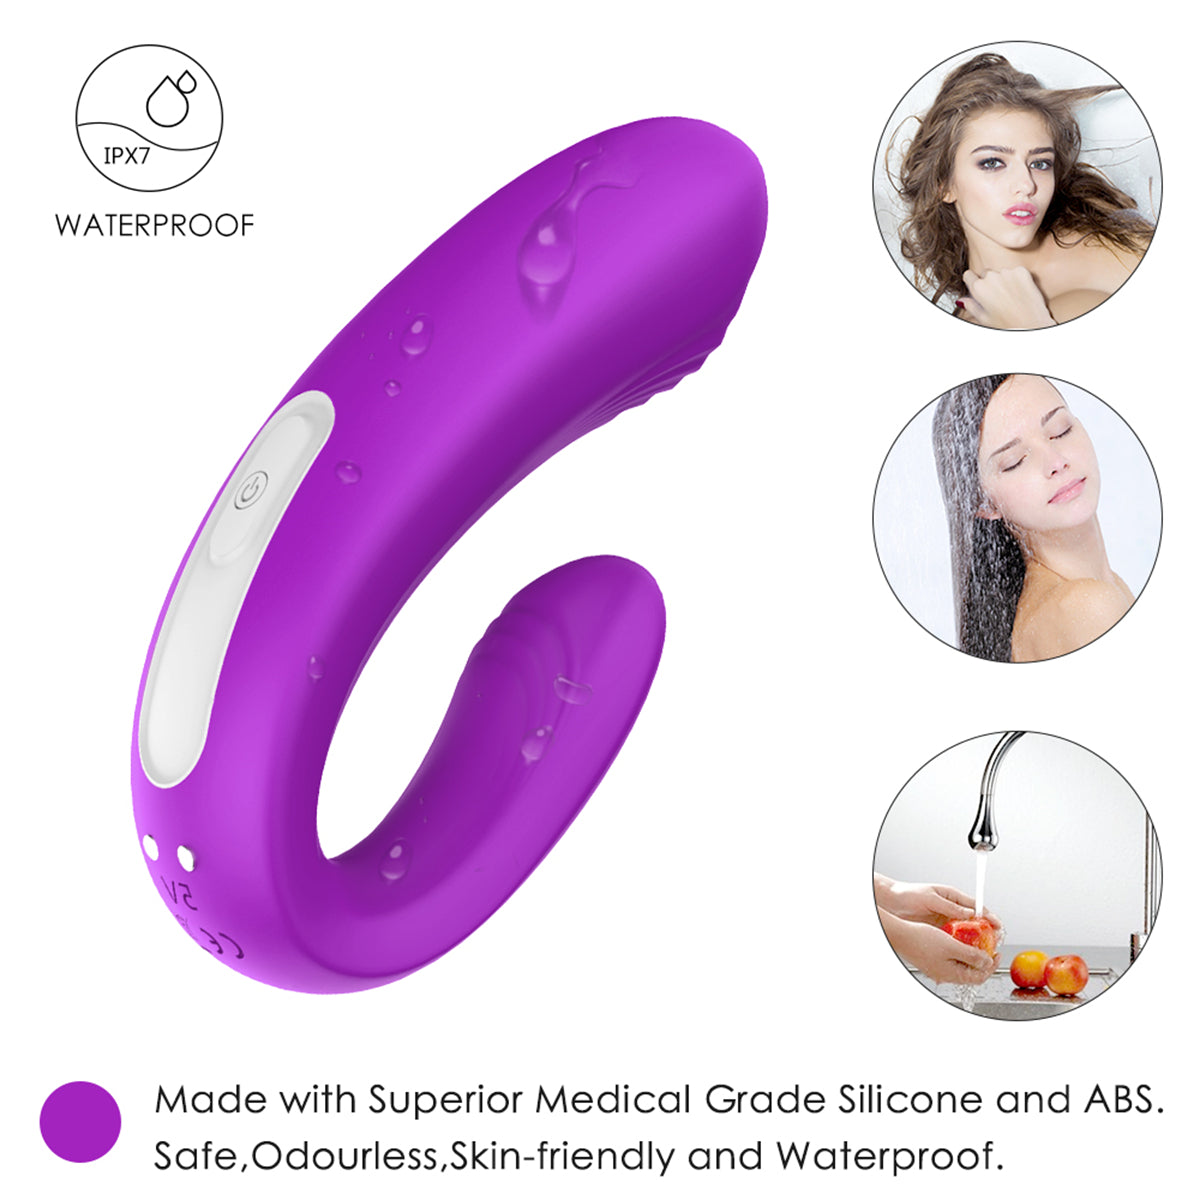 S130-2 Silicone wholesale oral sexual clit remote control g spot vibrator rechargeable women couple vibrator sex toy couples